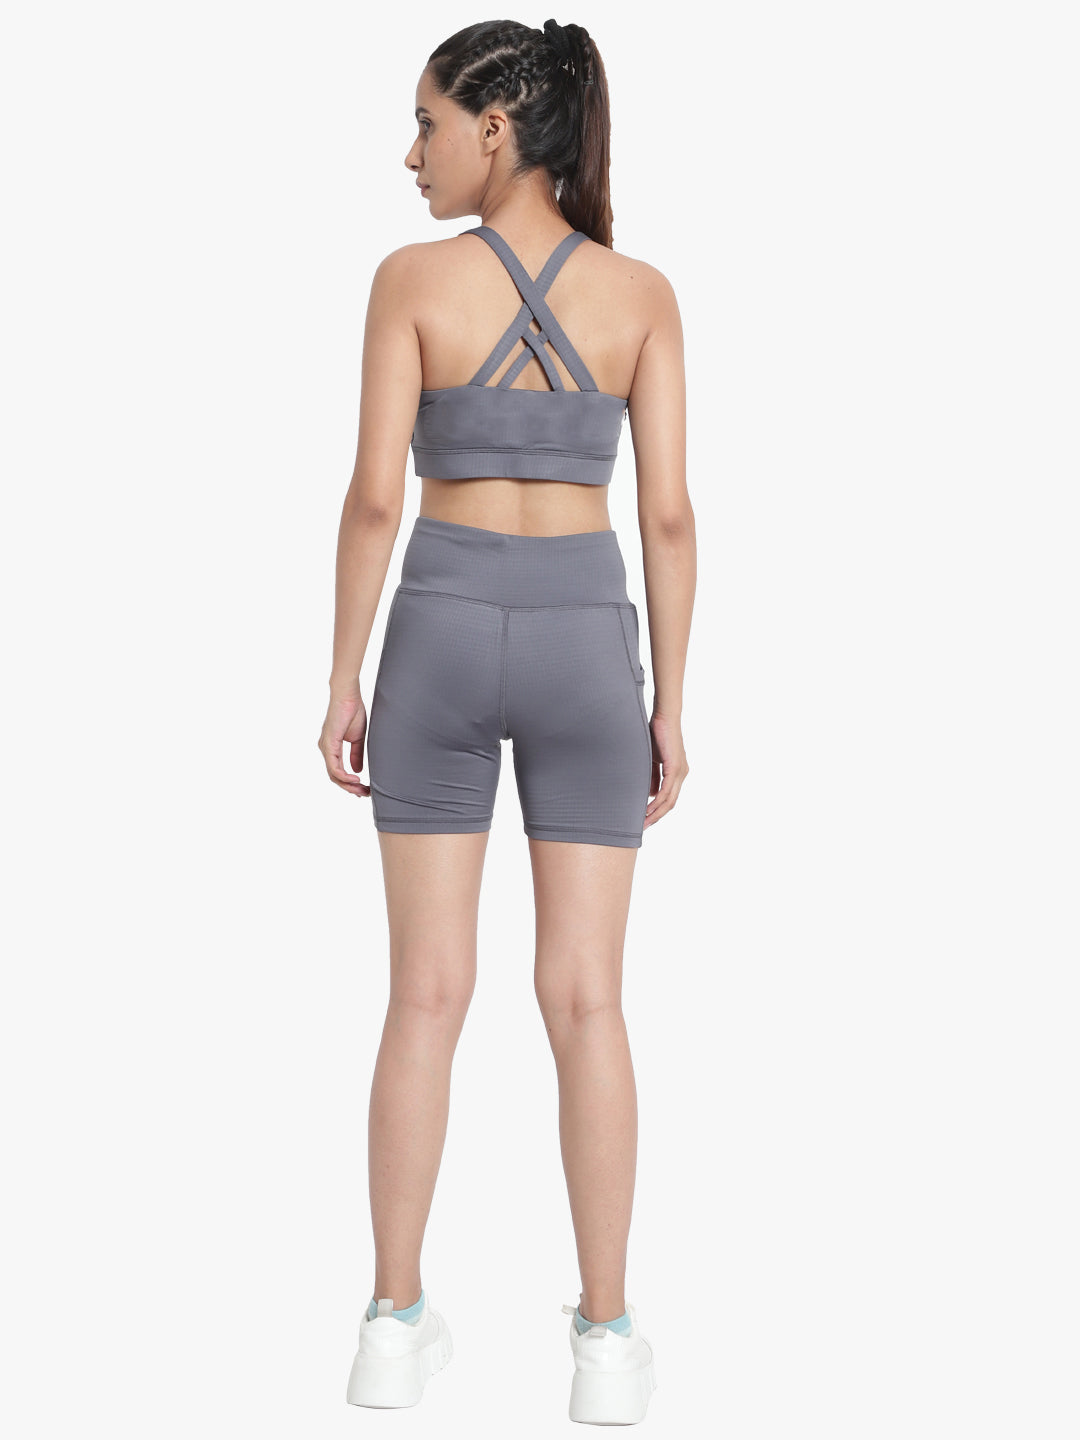 Mirage Shorts & Sports Bra Set - Light Grey